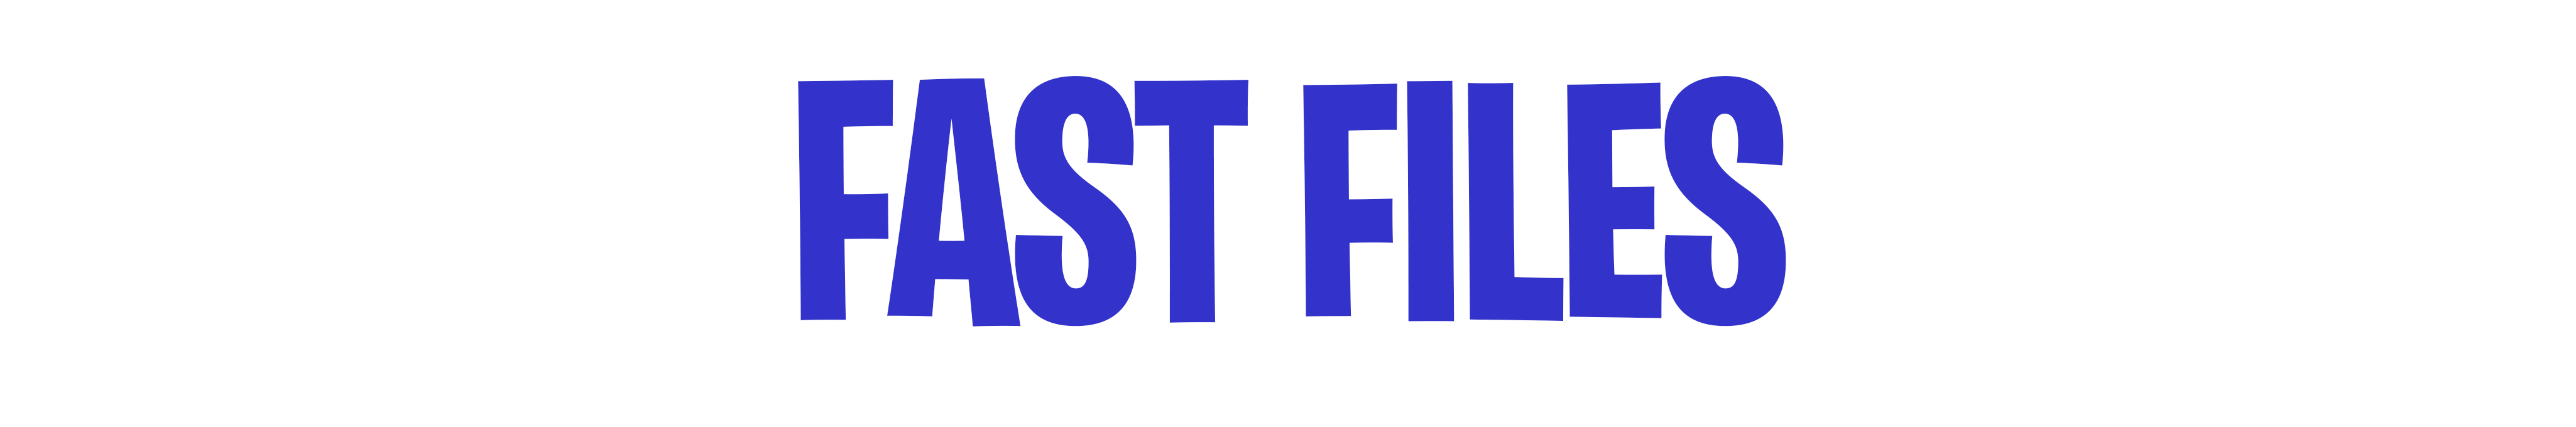 Fast-Files